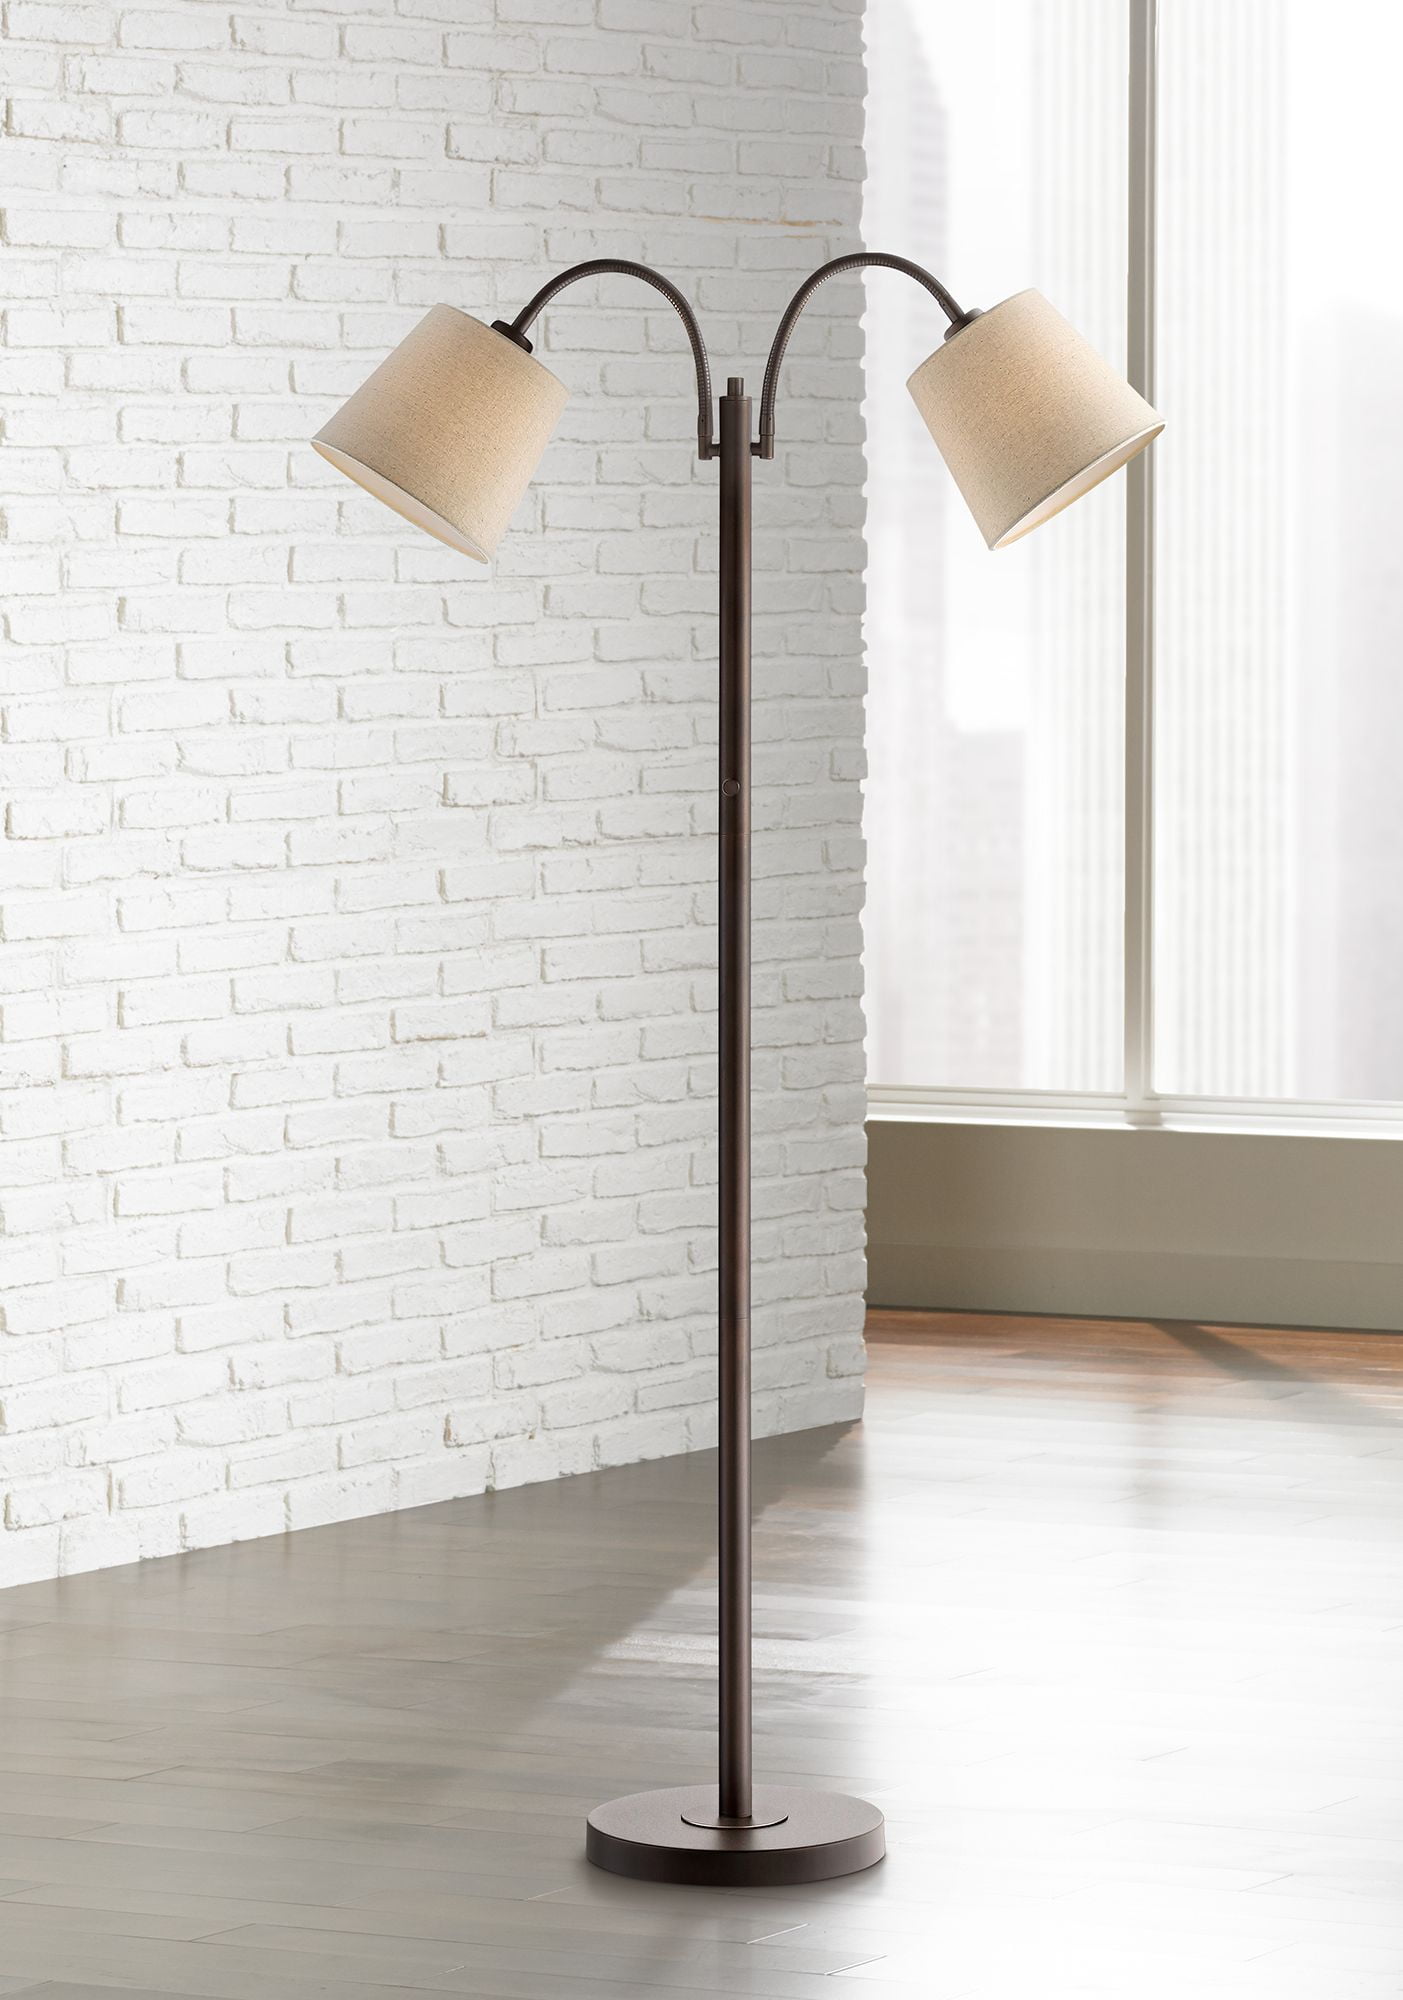 360 Lighting Modern Floor Lamp 56' Tall Dark Bronze Twin Arm Adjustable Gooseneck Neutral Cotton Drum Shade for Living Room Reading Bedroom